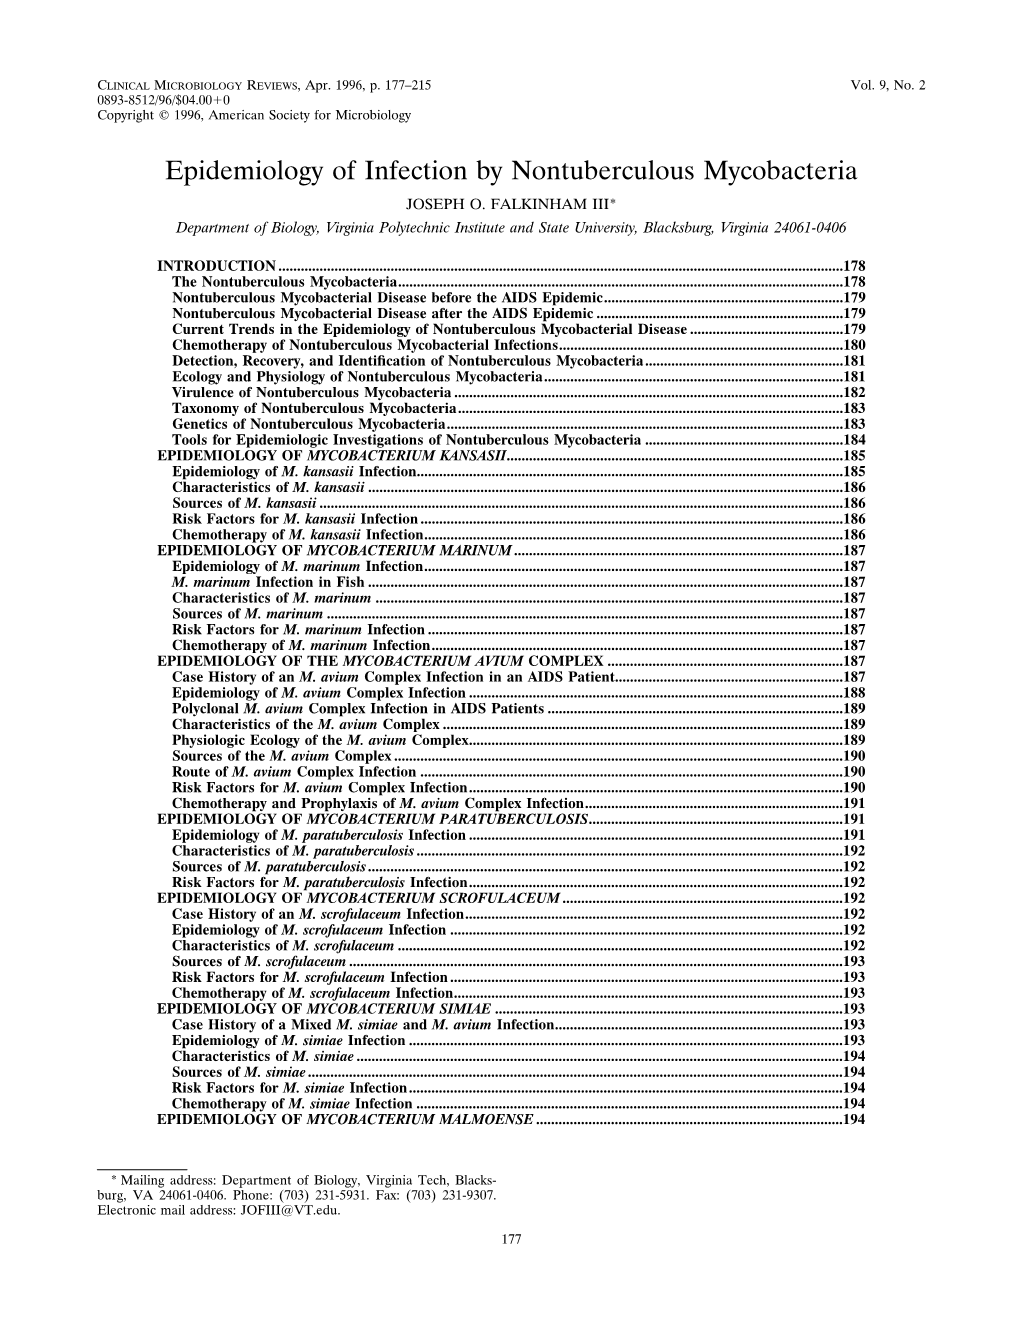 Epidemiology of Infection by Nontuberculous Mycobacteria JOSEPH O